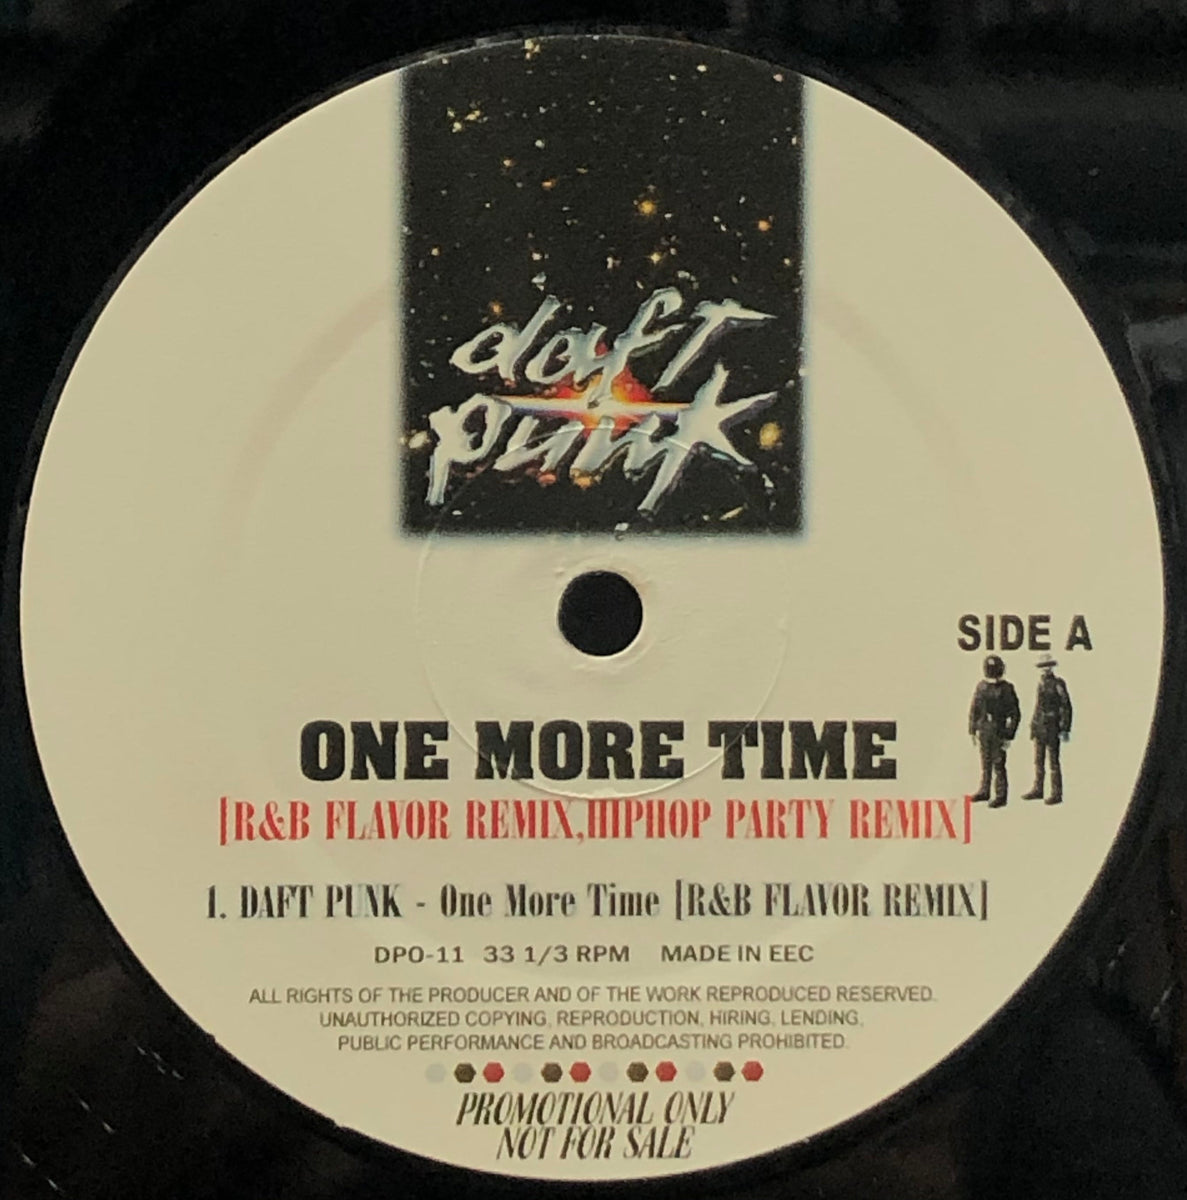 Daft Punk “One More Time” 12インチレコード - レコード